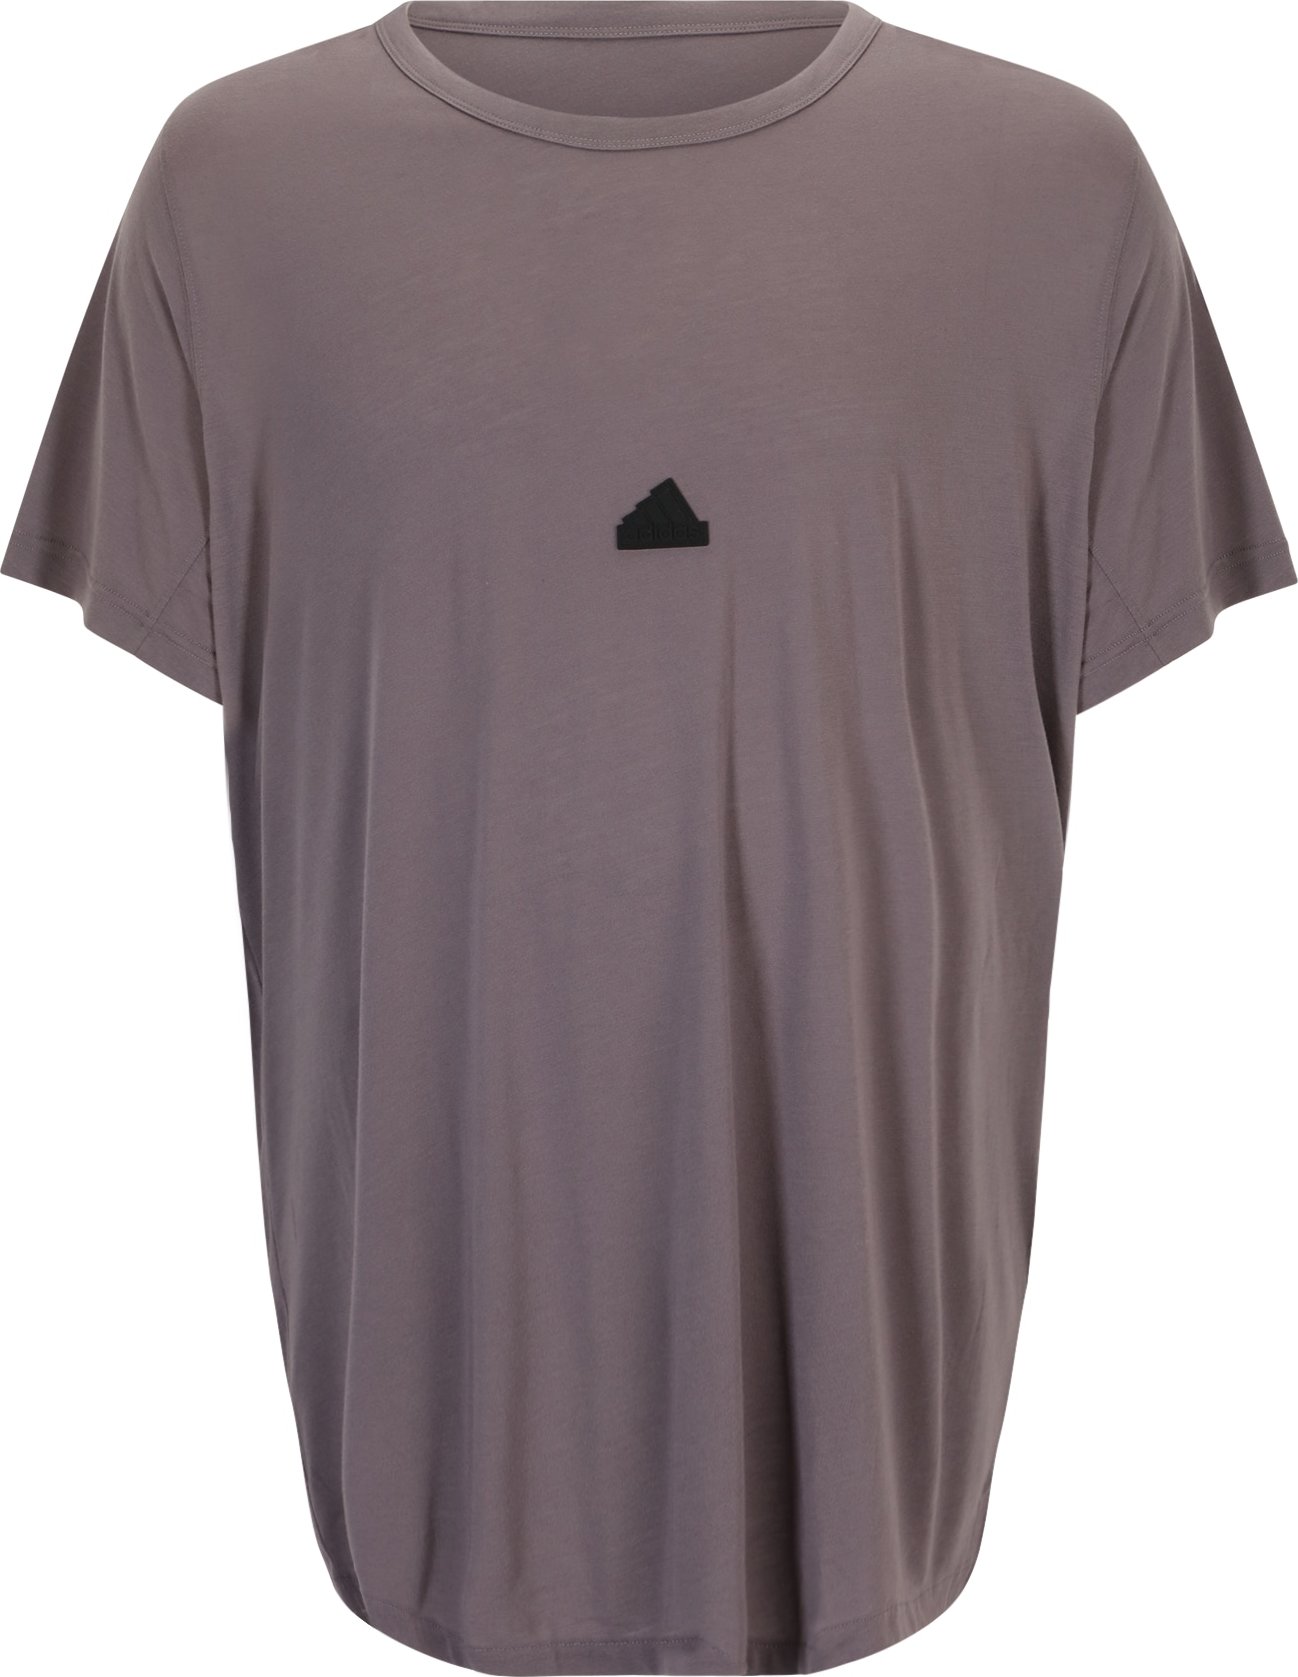 ADIDAS SPORTSWEAR Funkční tričko šedá / černá